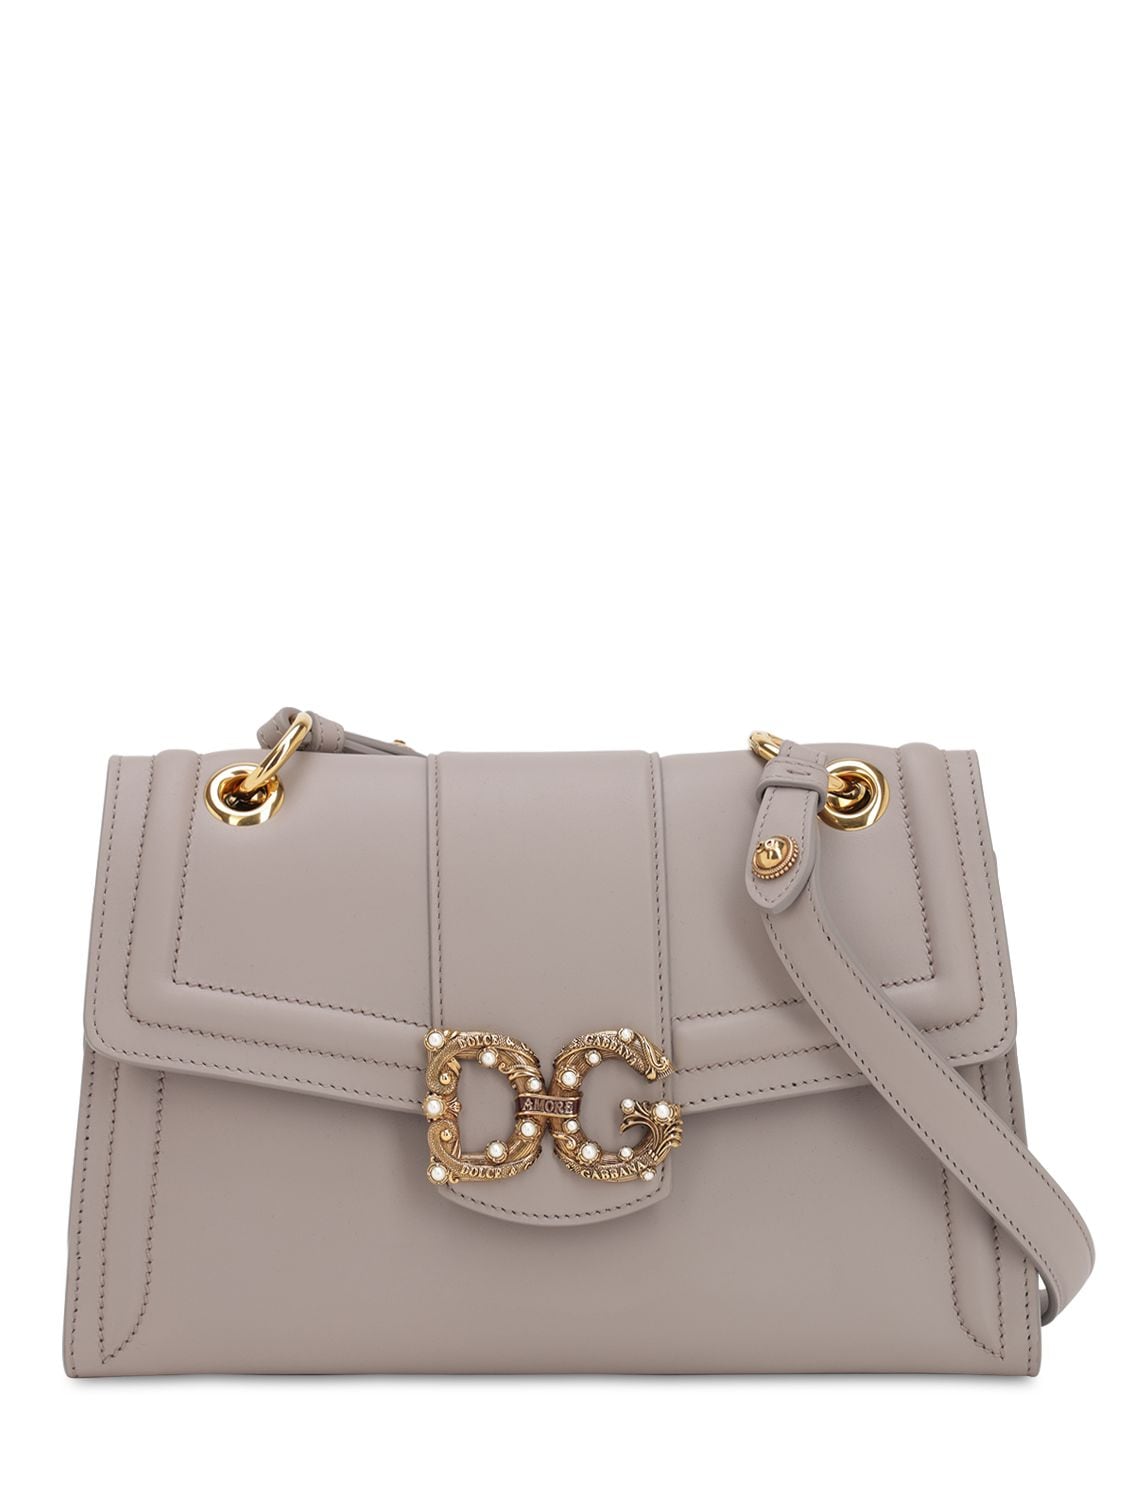 Dolce & Gabbana Dg Amore Small Leather Shoulder Bag In Sabbia